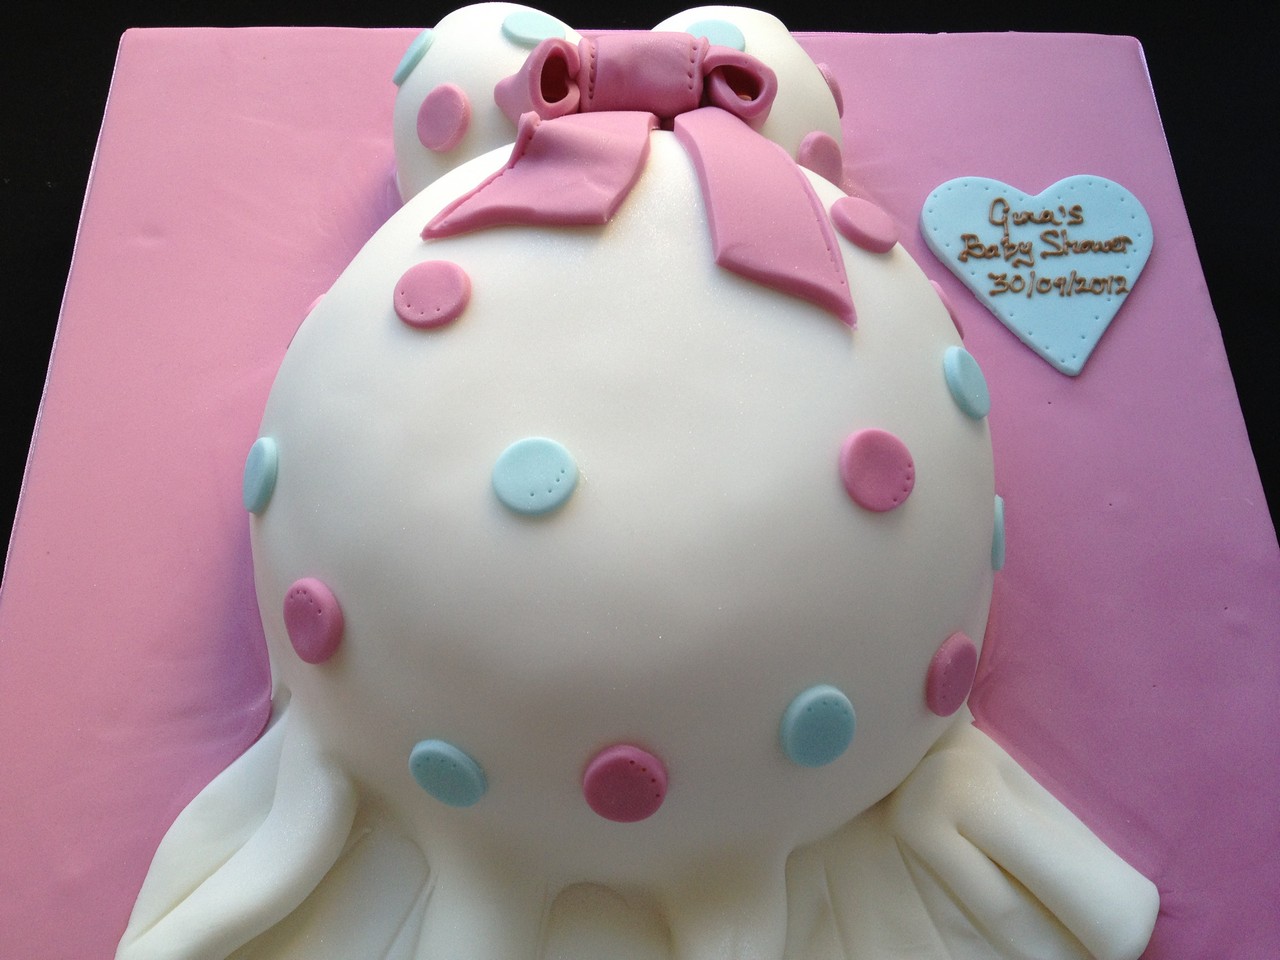 Pregnant Bump Cake | Novelty Cakes